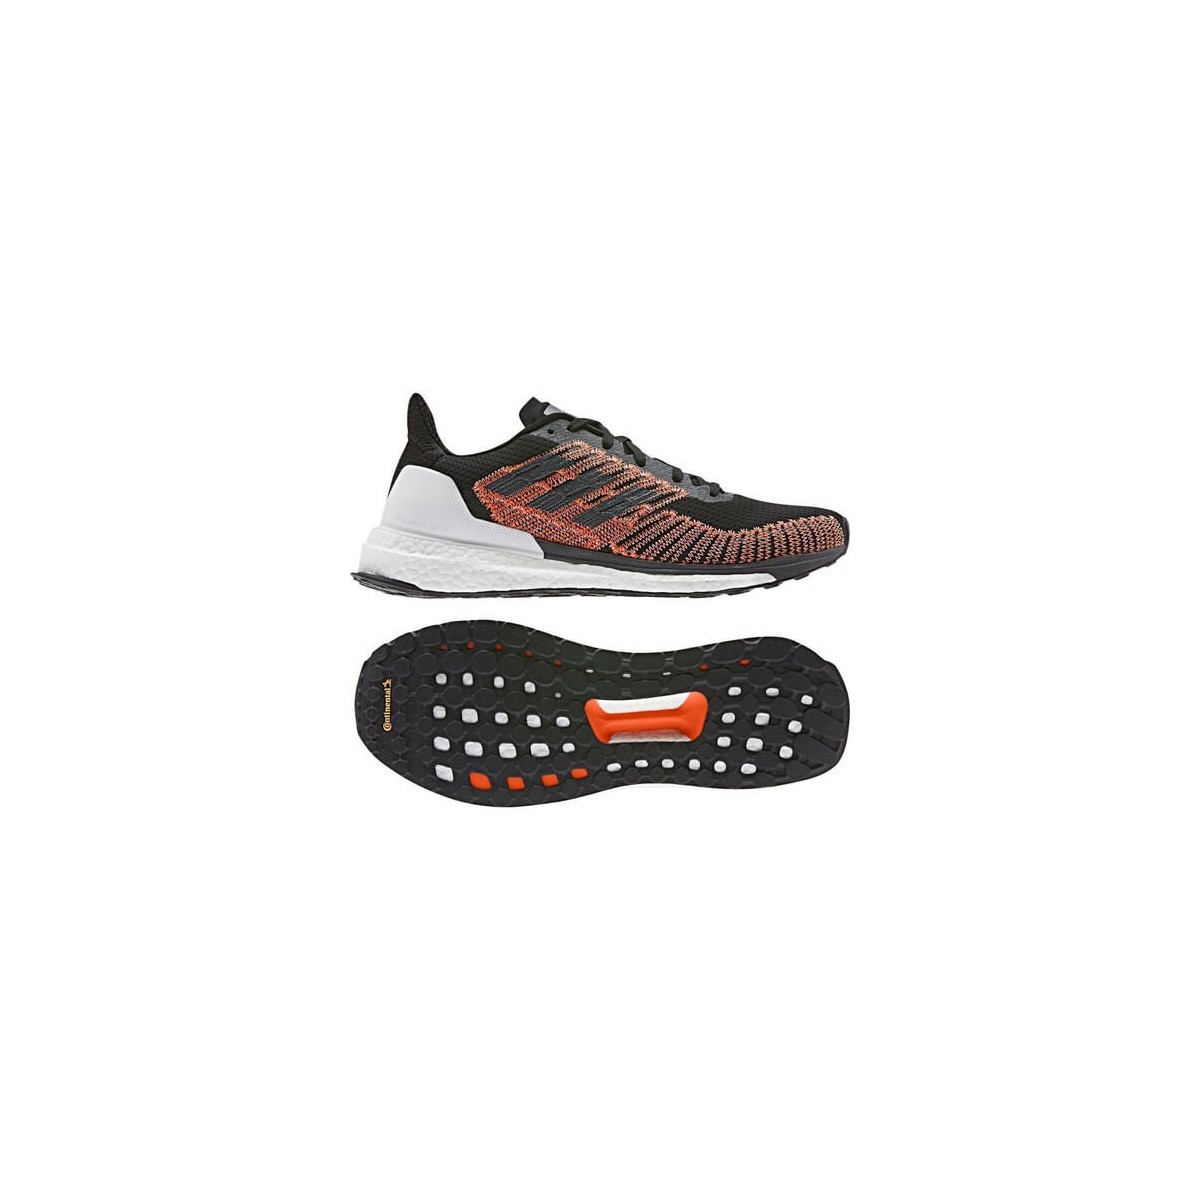 abrelatas Usando una computadora Célula somatica Adidas Solar Boost ST 19 Women's Running Shoes Black Red